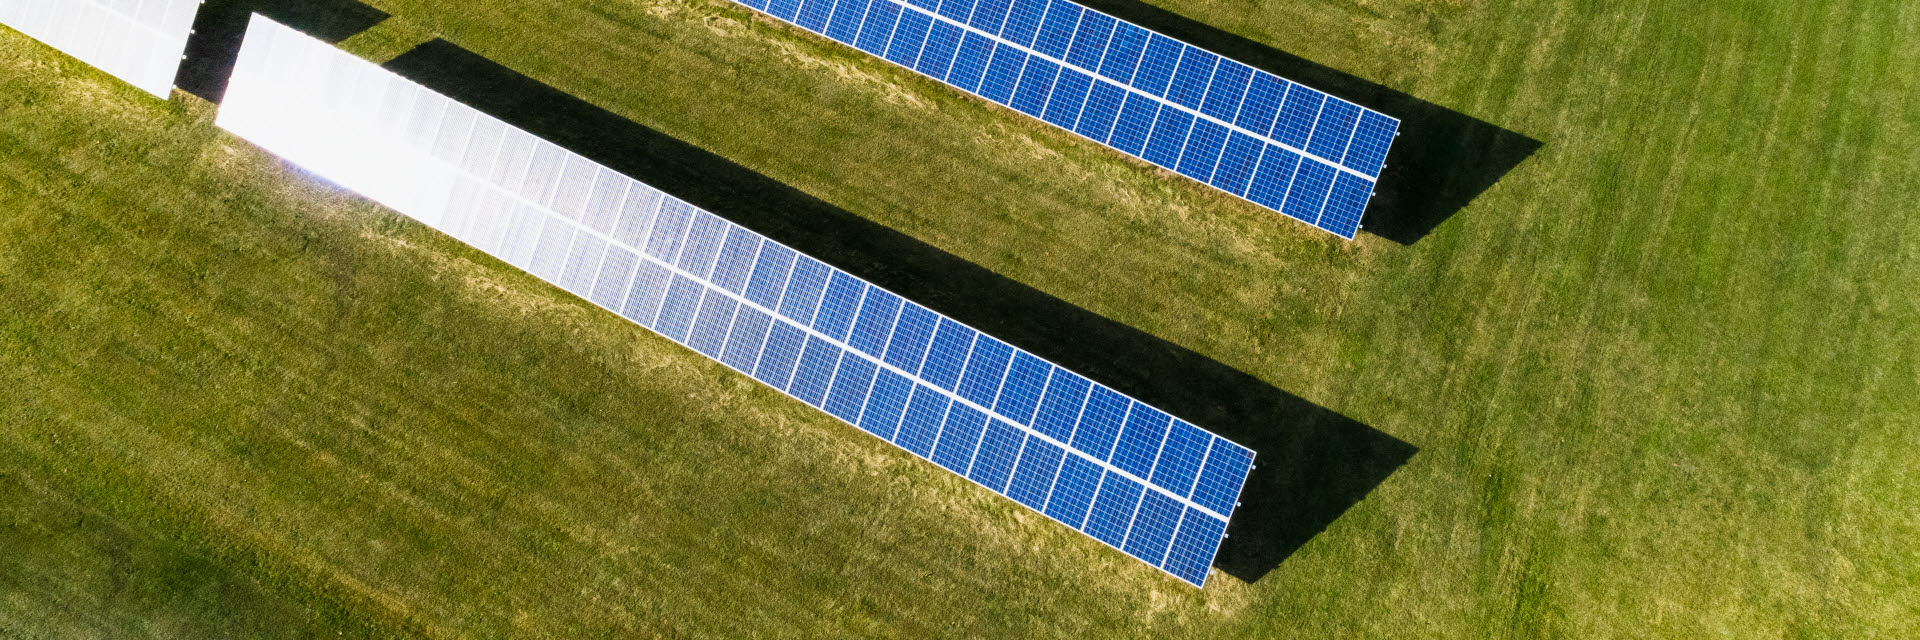 Rows of solar panels in a meadow, Österåker, Stockholm.